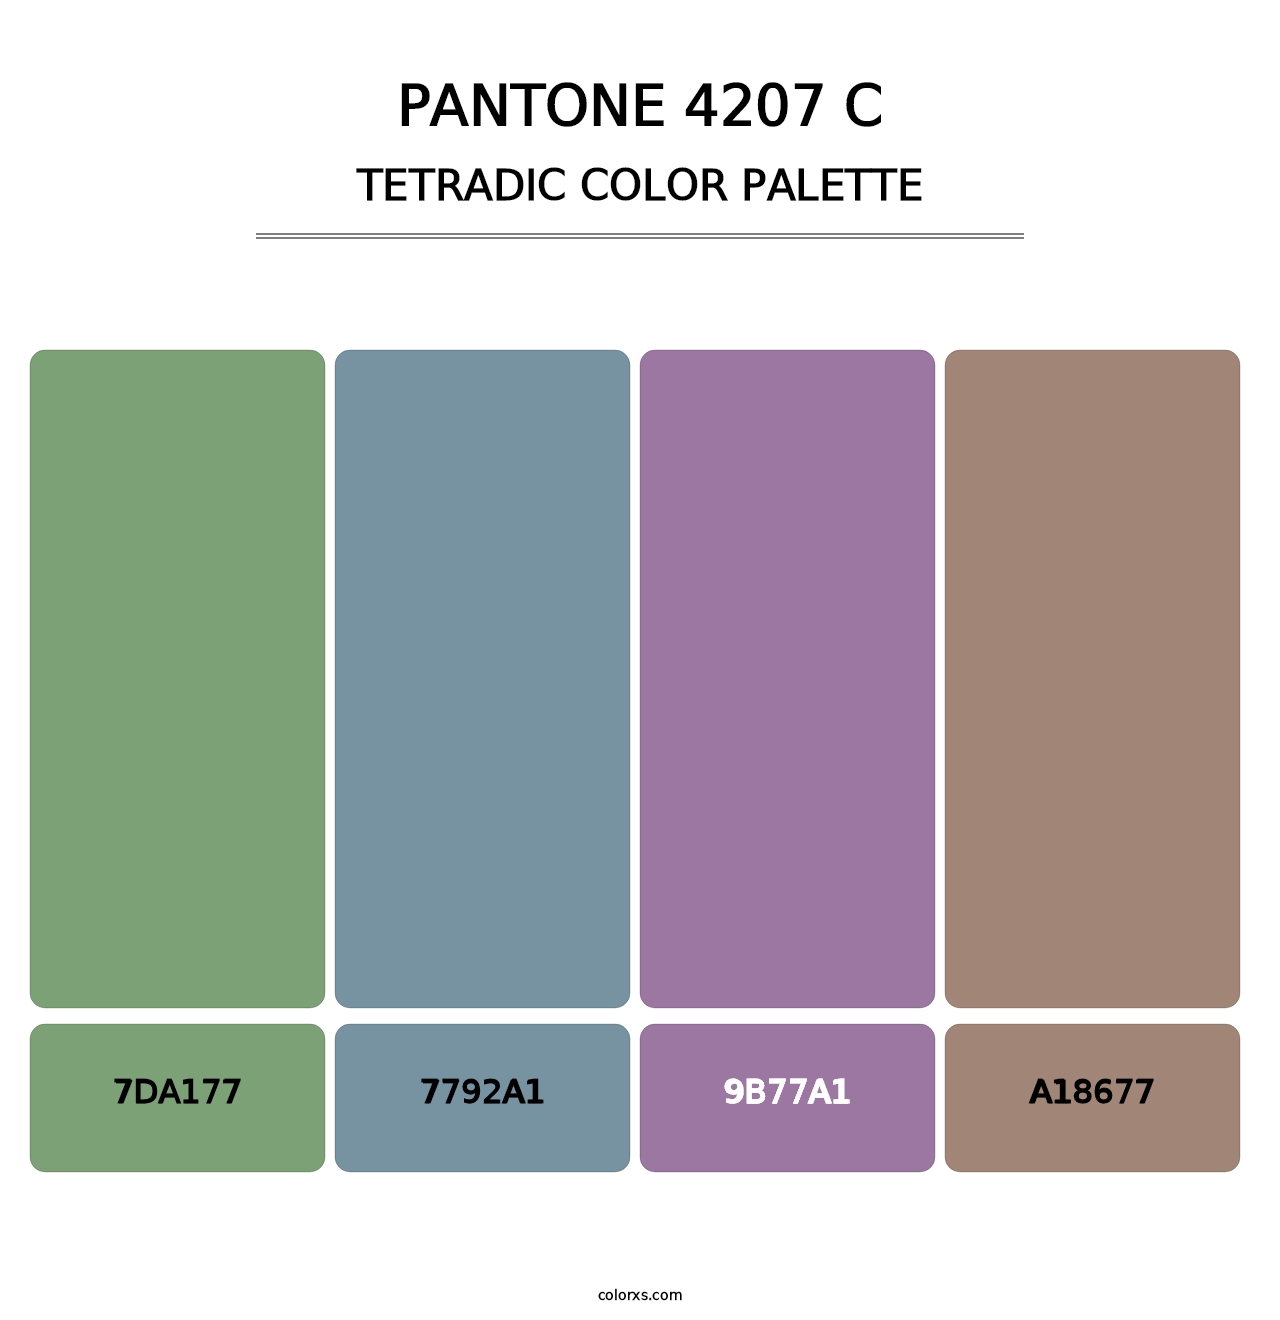 PANTONE 4207 C - Tetradic Color Palette